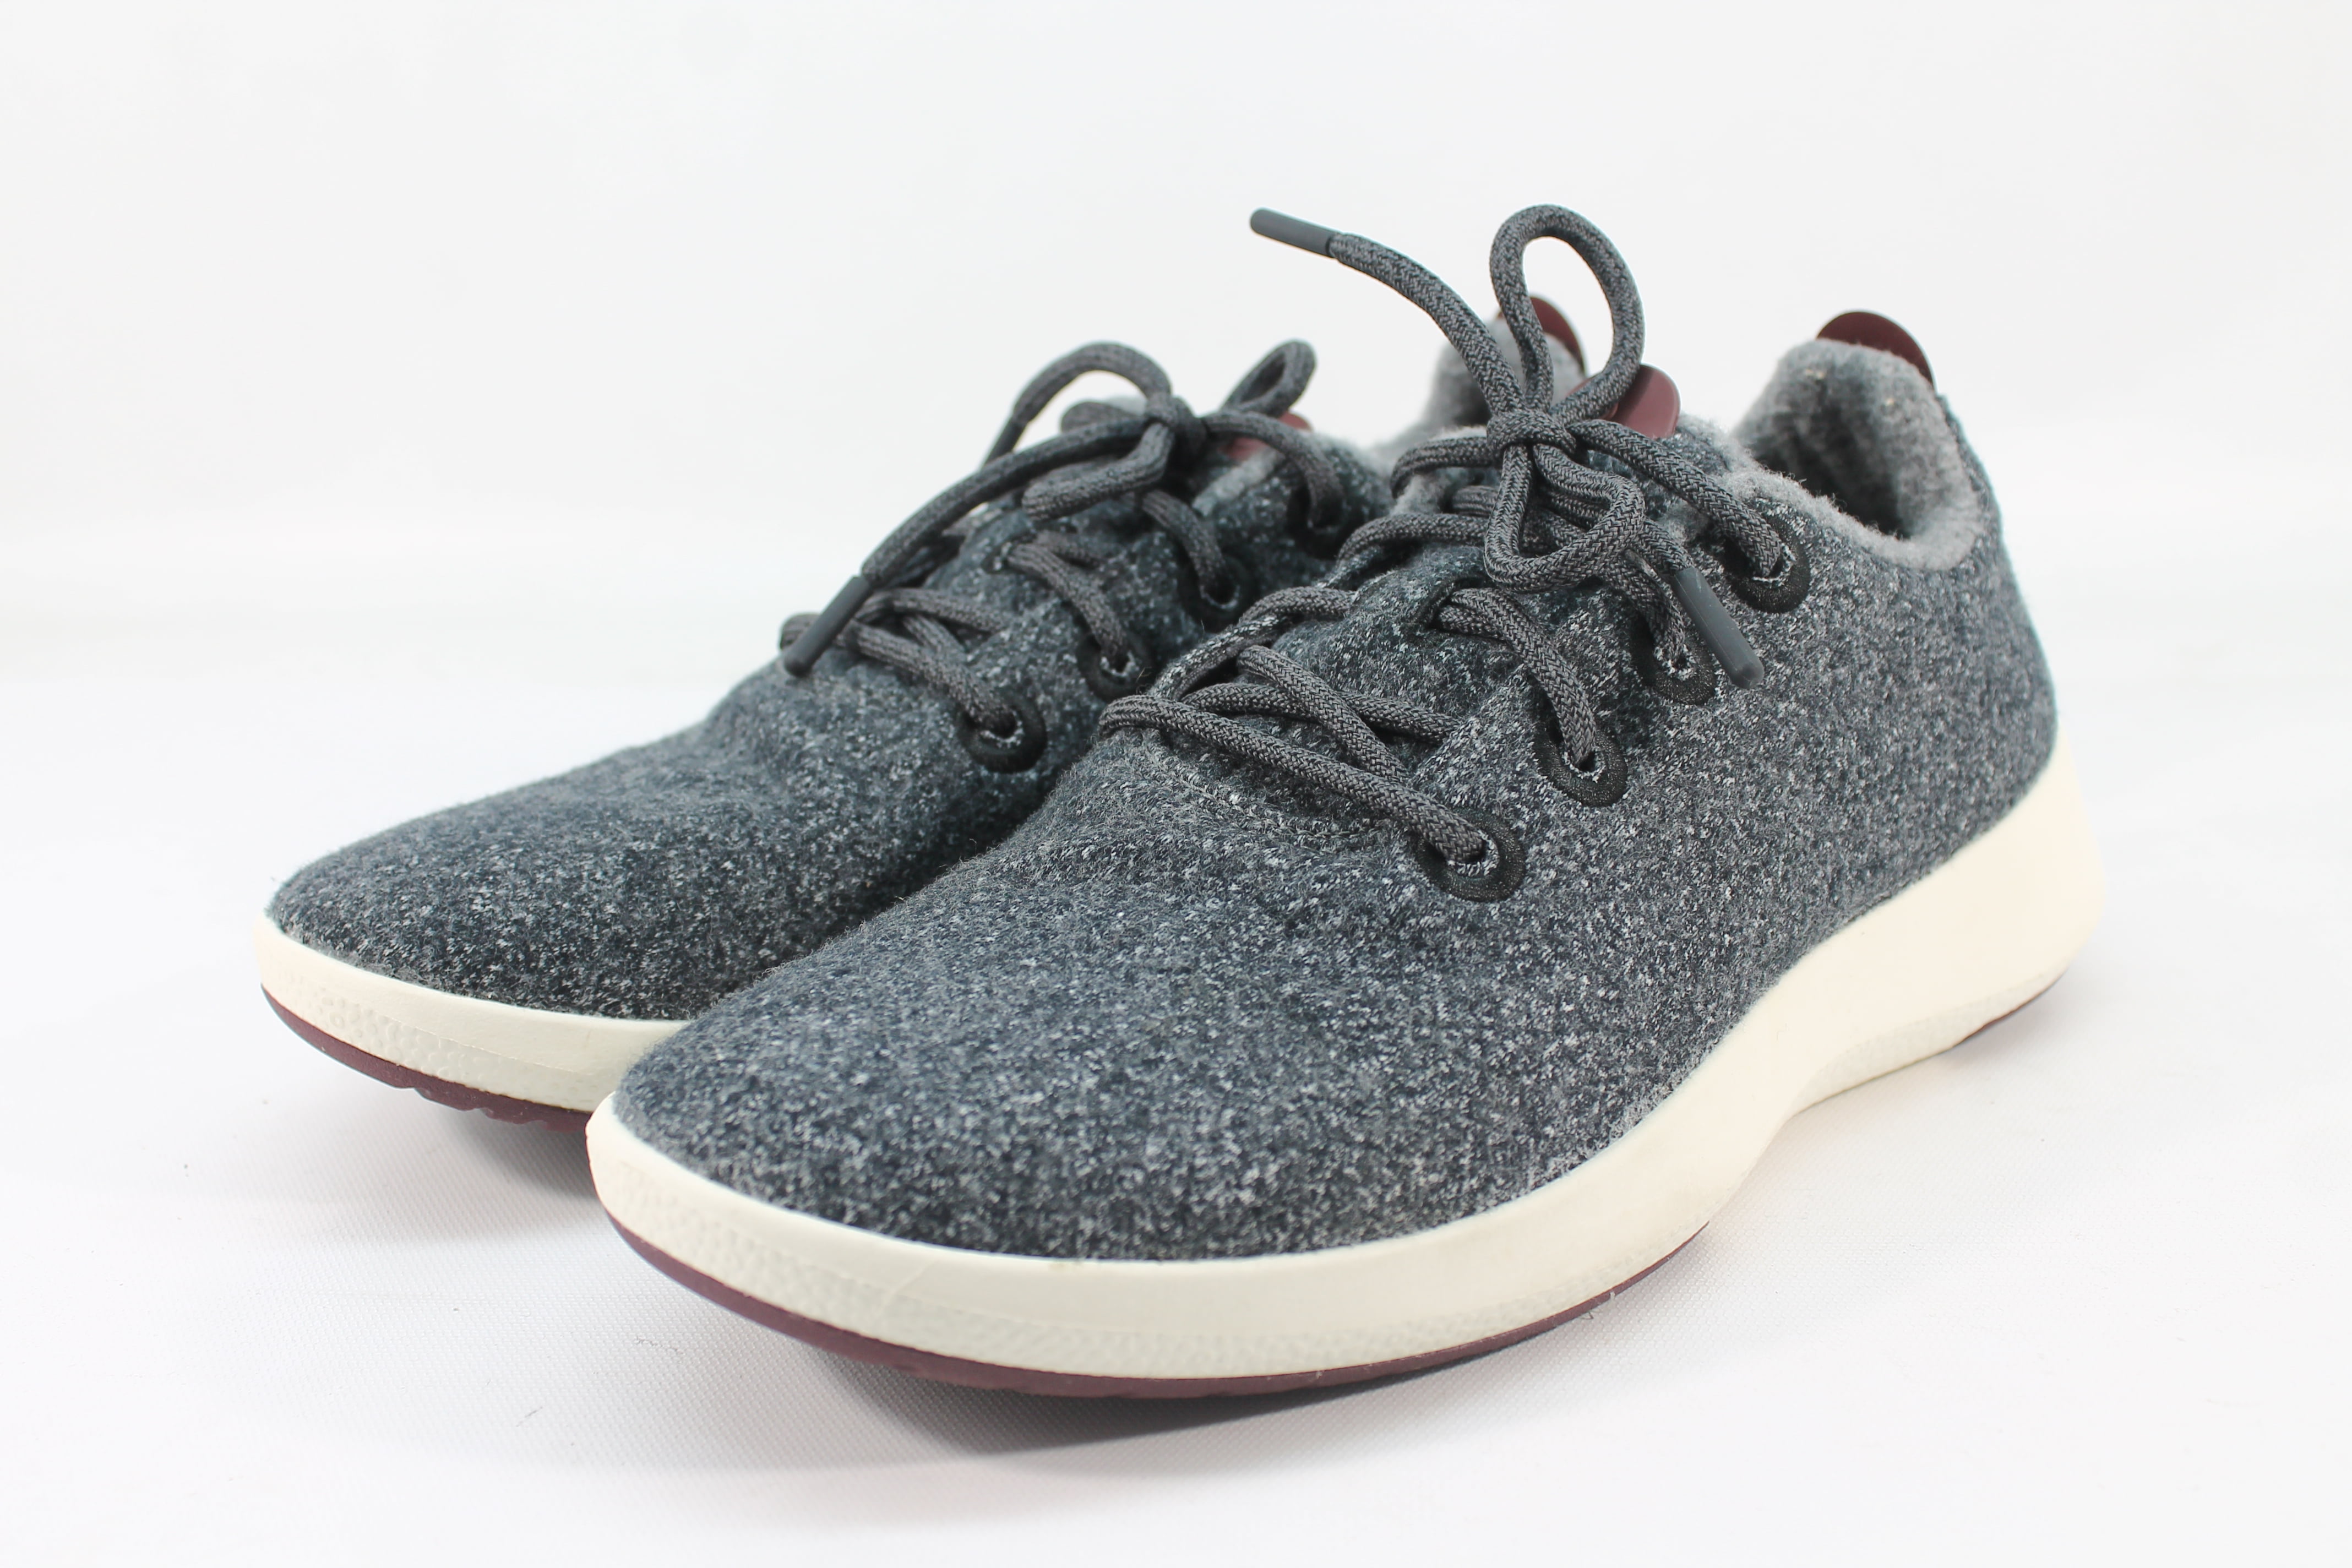 Allbirds Men's Wool Runners Natural Grey/Grey Sole Comfort Shoes FLSAMP 